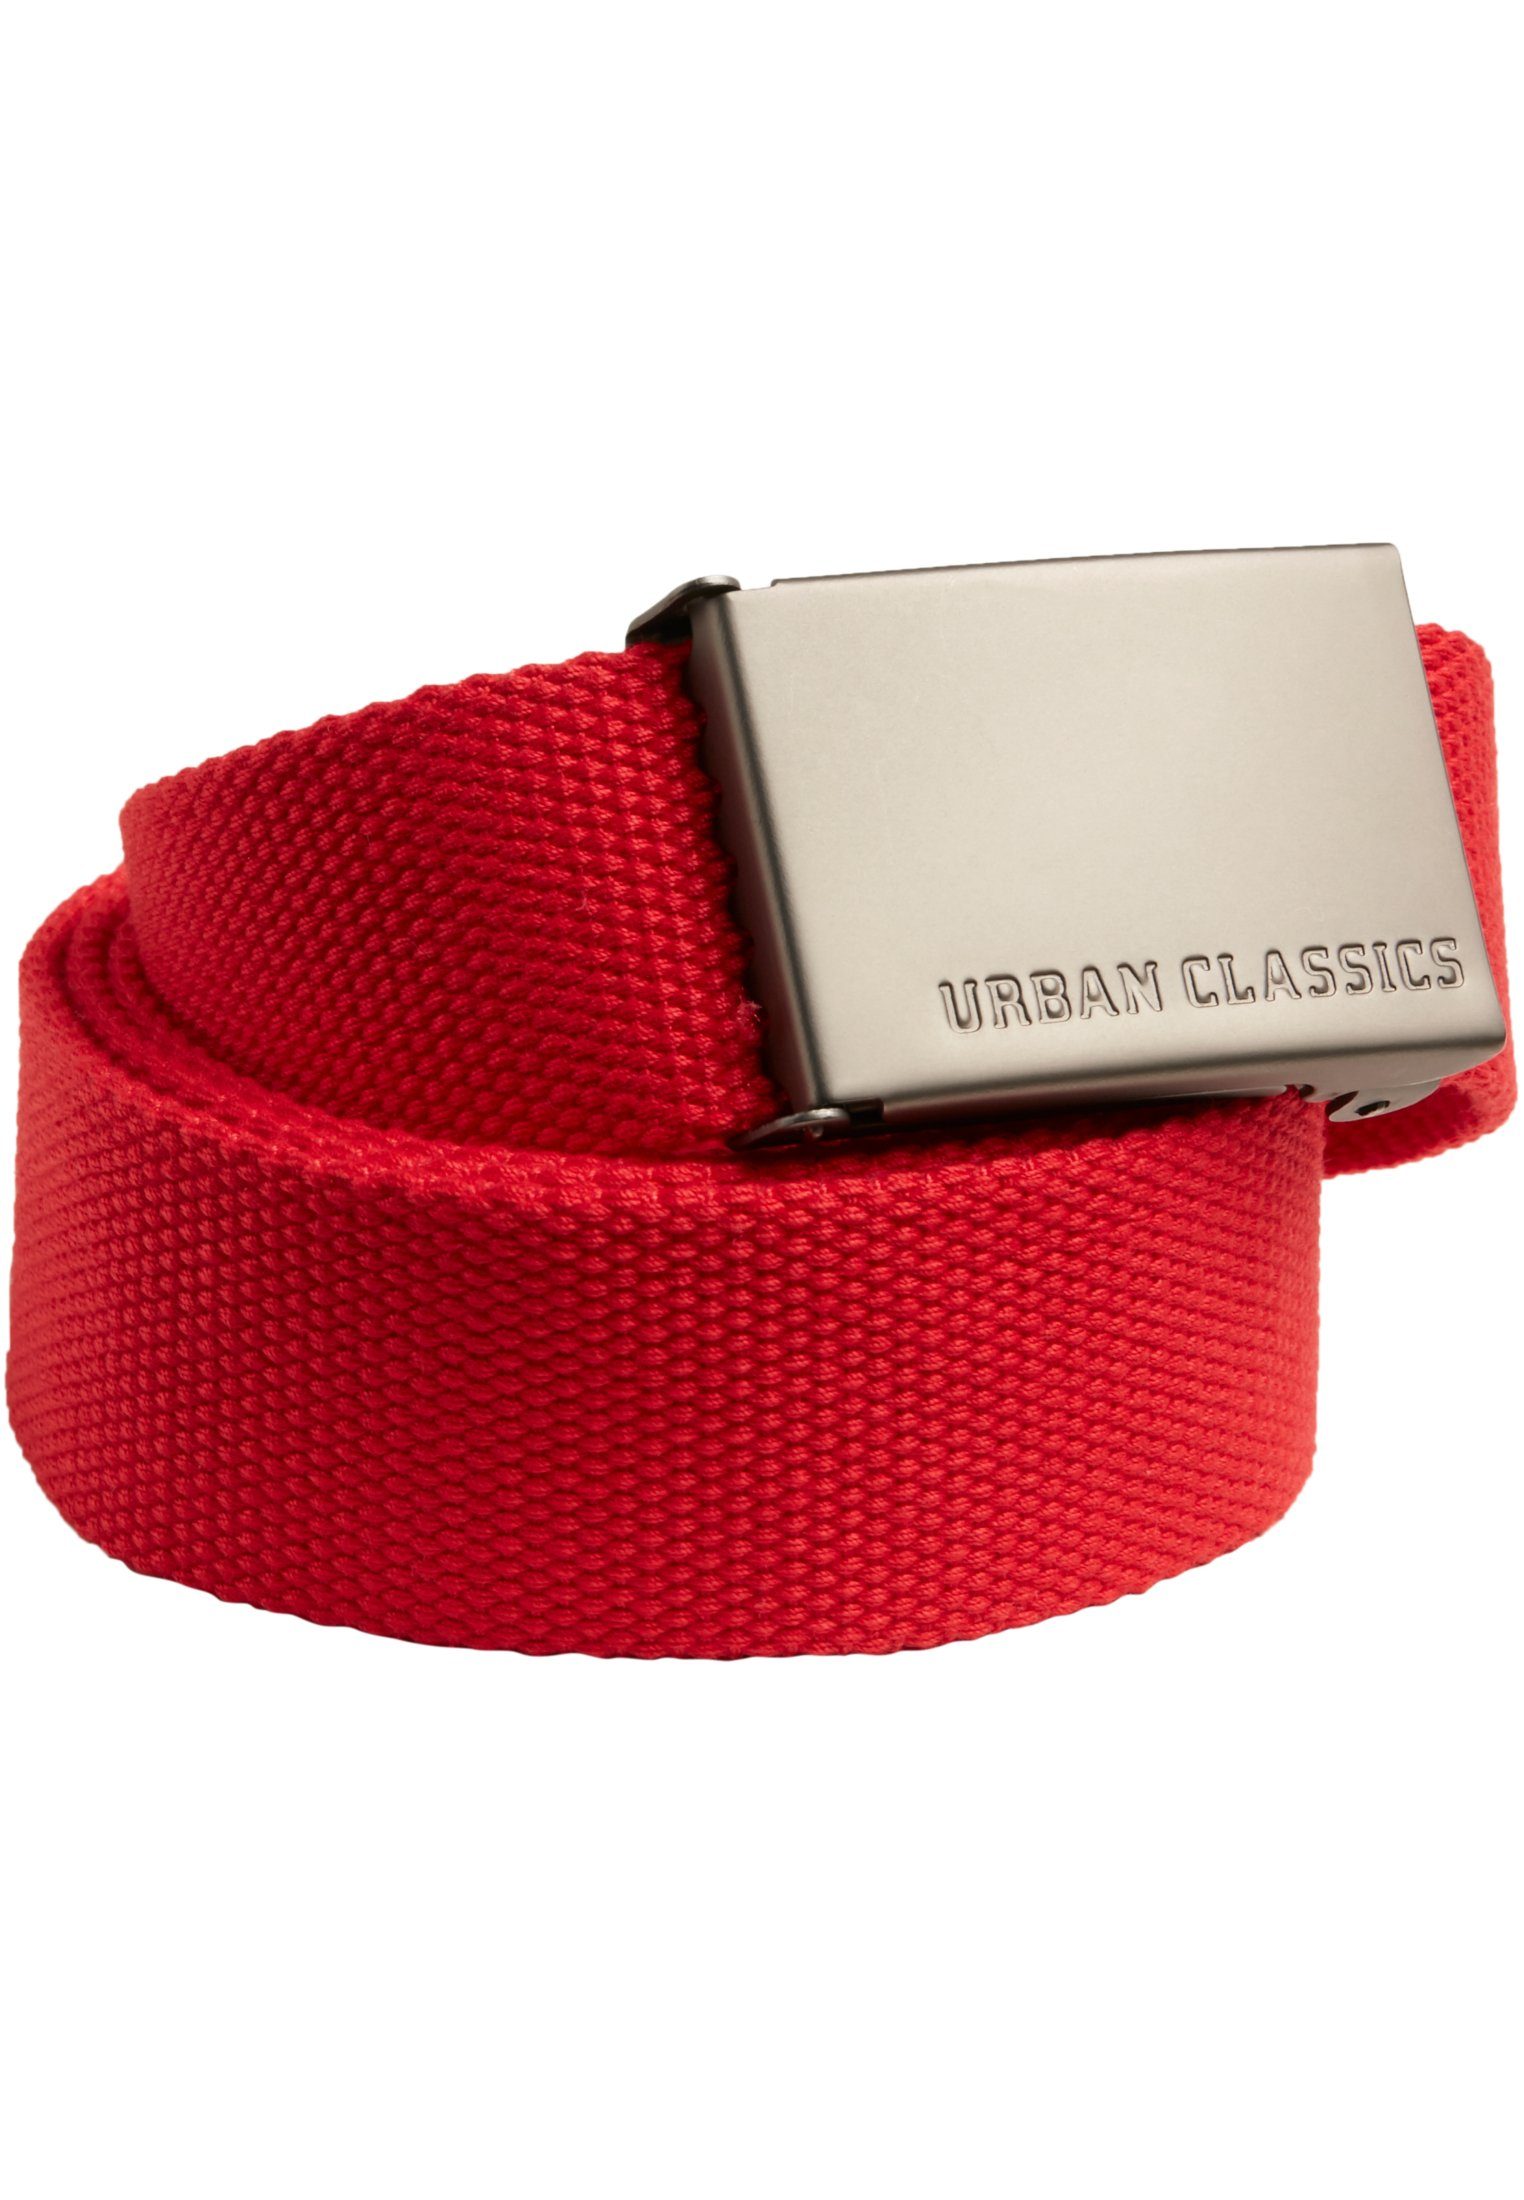 URBAN CLASSICS Hüftgürtel Belts Accessoires Canvas red